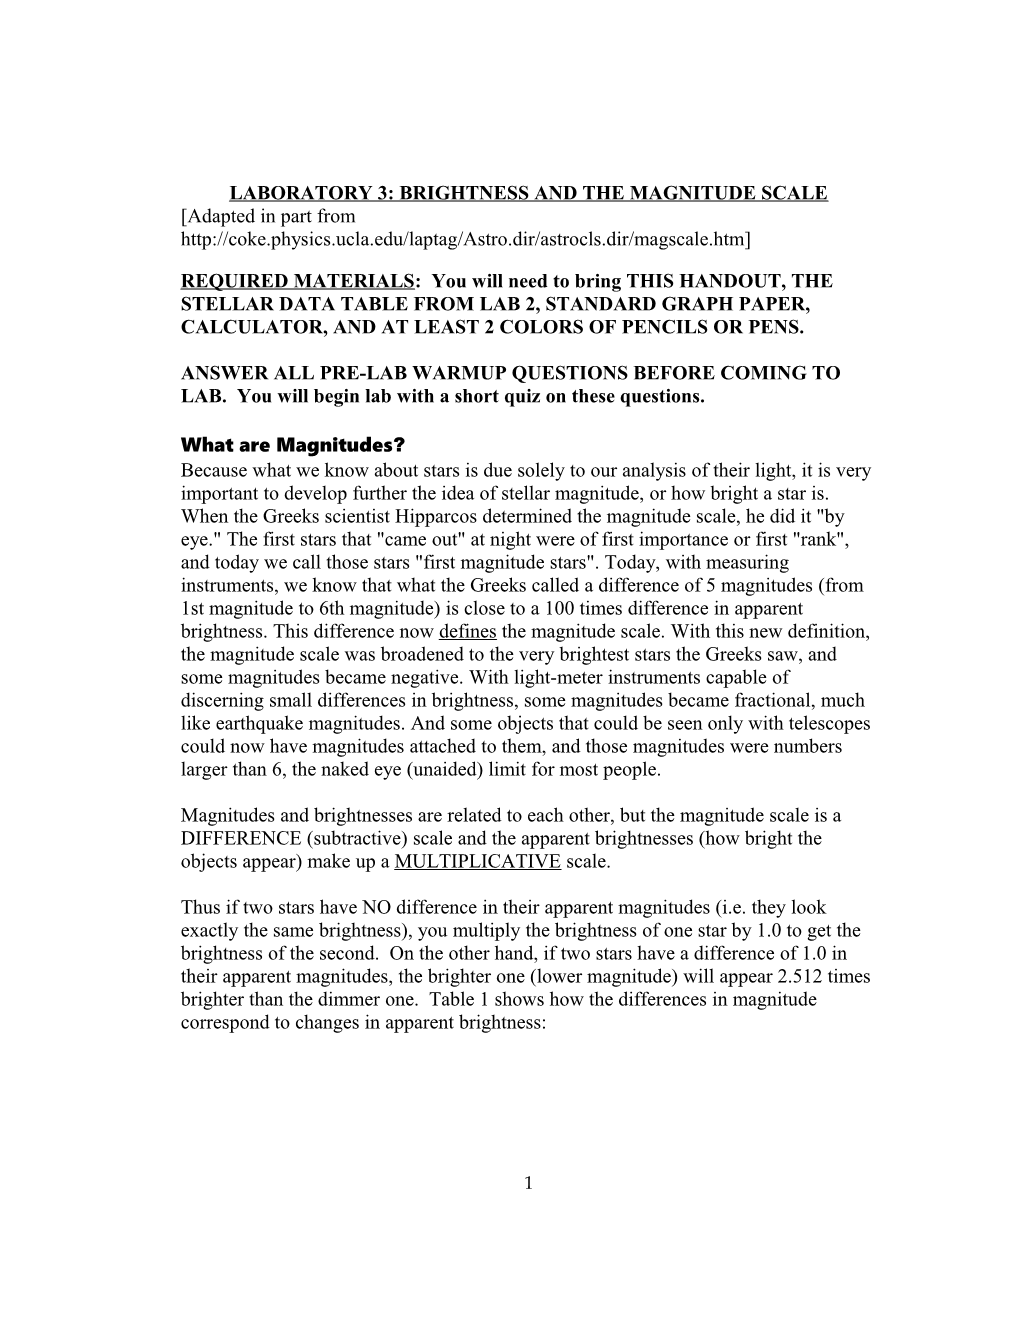 Laboratory 3: Brightness and the Magnitude Scale